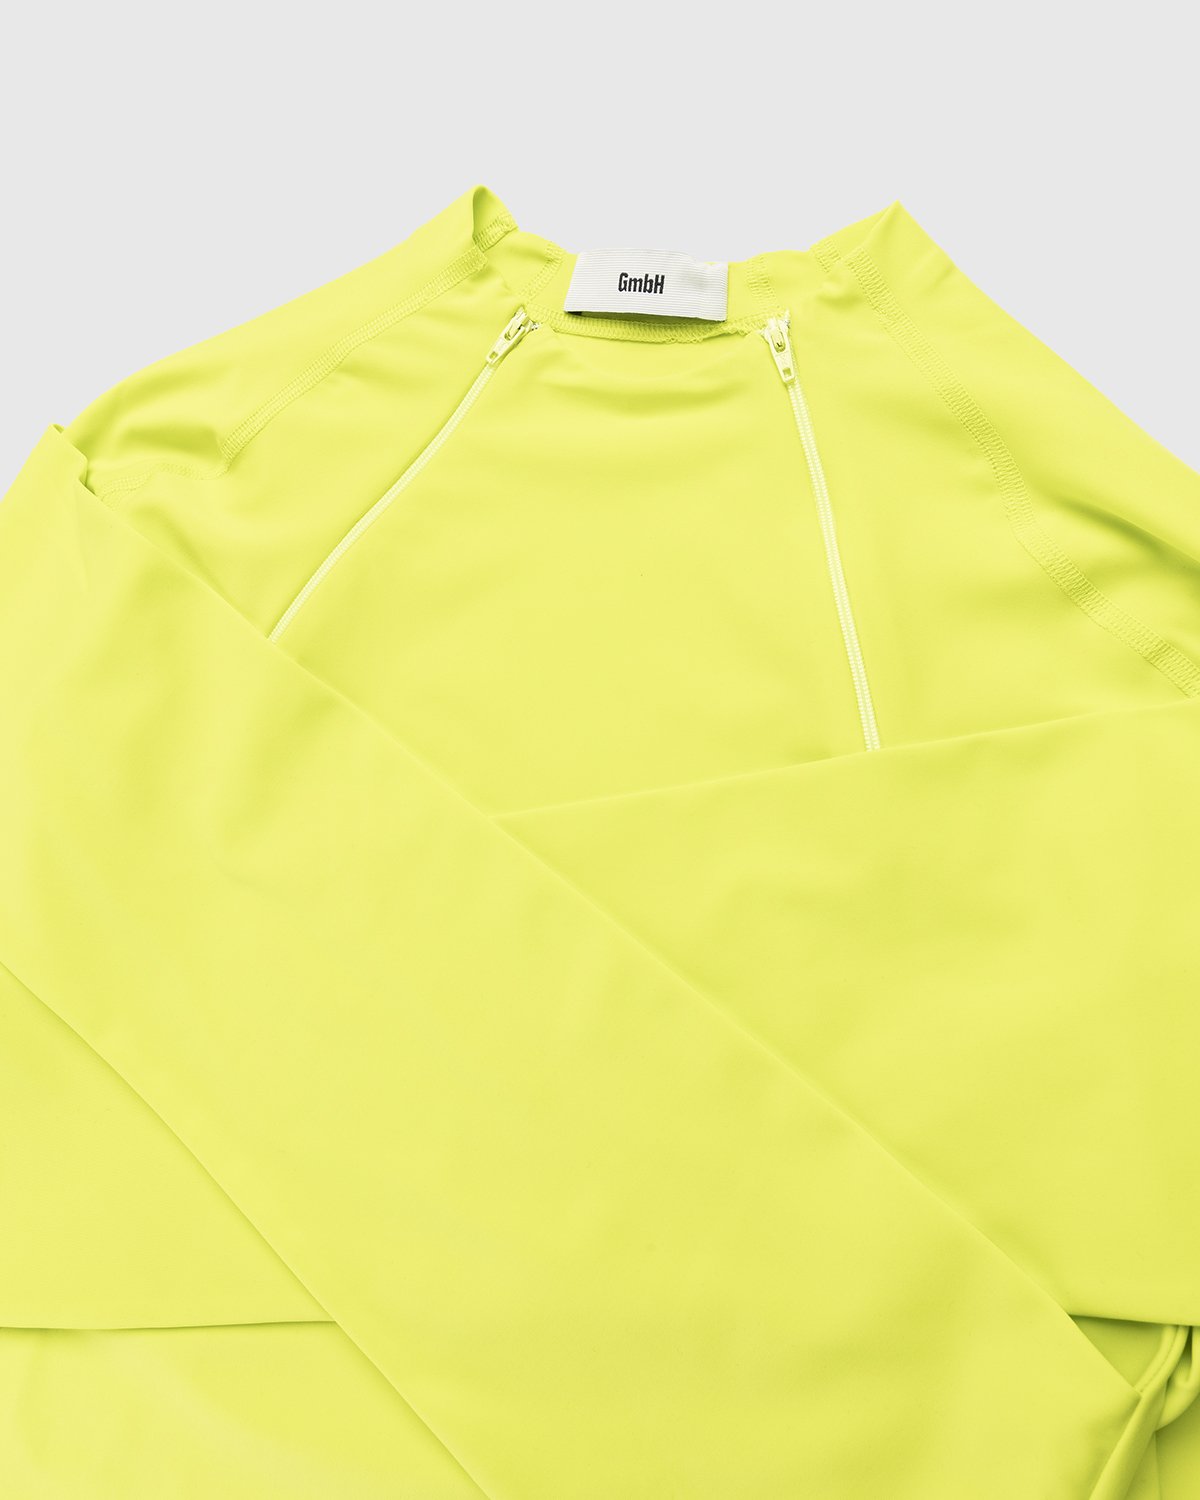 GmbH - Raha Recycled Jersey Neon Yellow - Clothing - Yellow - Image 5